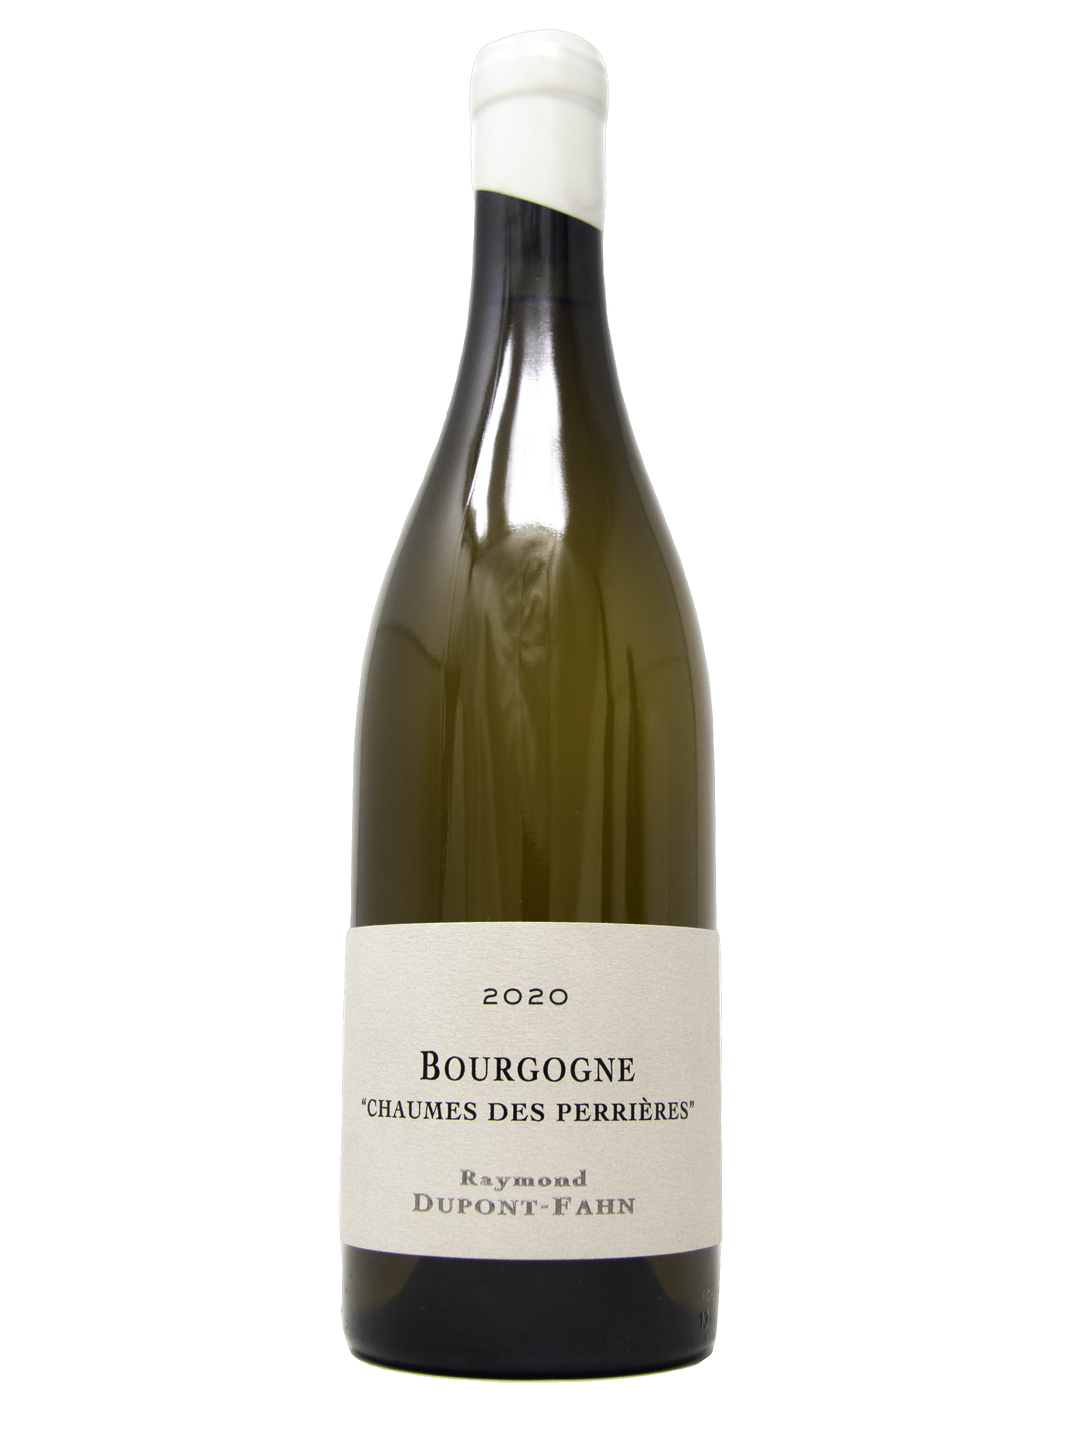 Dupont-Fahn "Chaumes des Perrieres" Bourgogne Blanc 2020